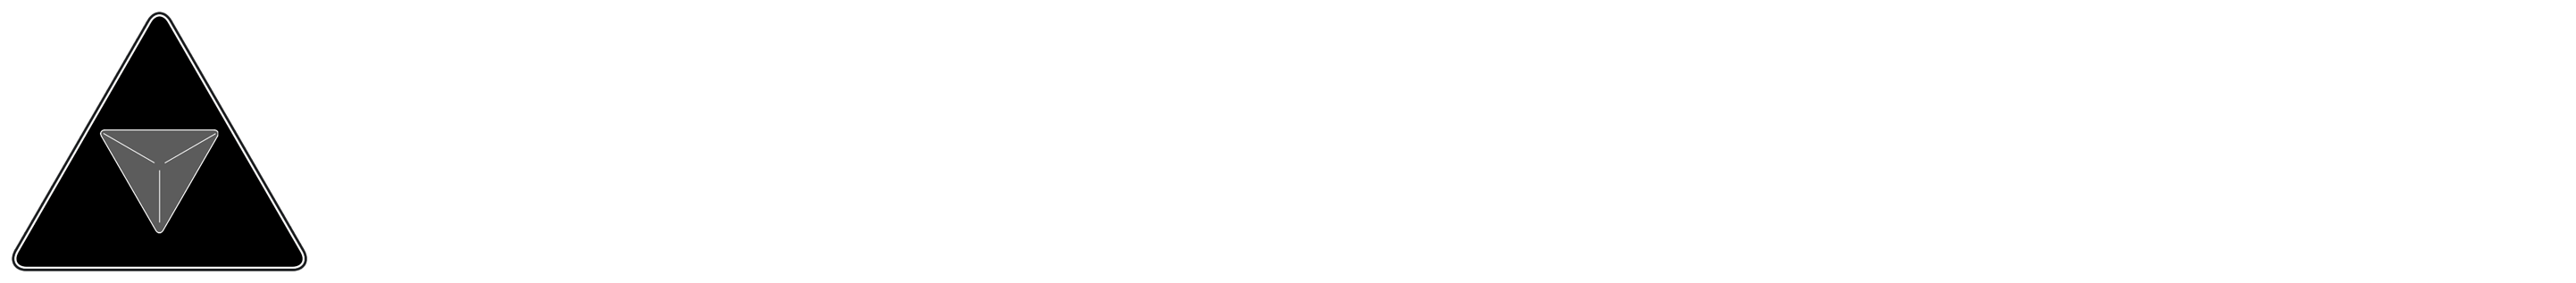 Pitch Dev Studios logo